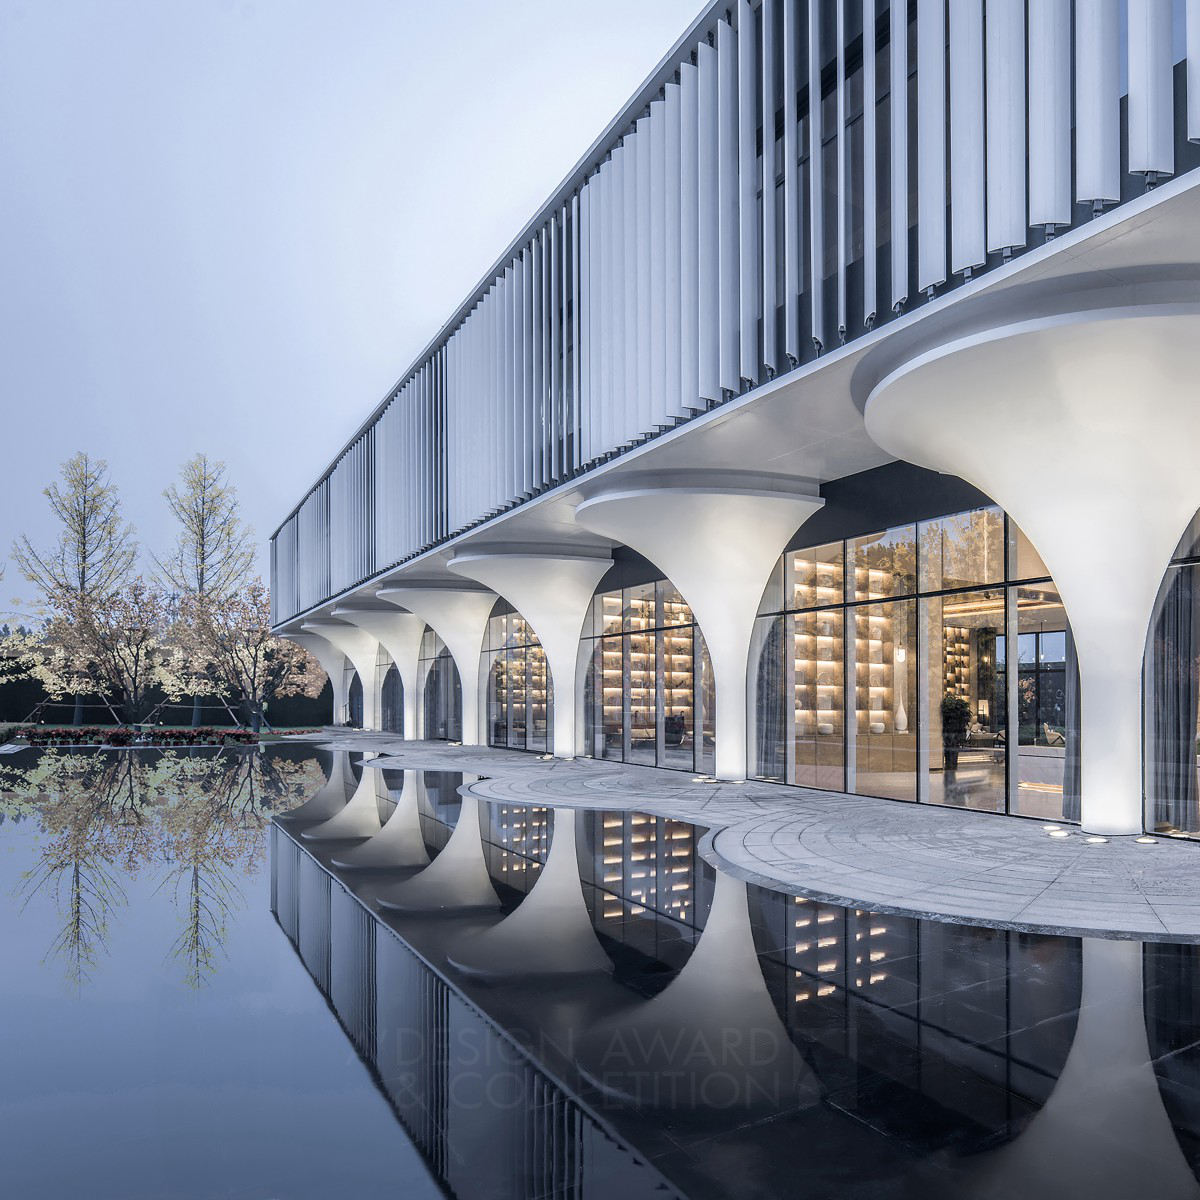 ZHOYU wins Silver at the prestigious A' Architecture, Building and Structure Design Award with Handan Zarsion Living Center.